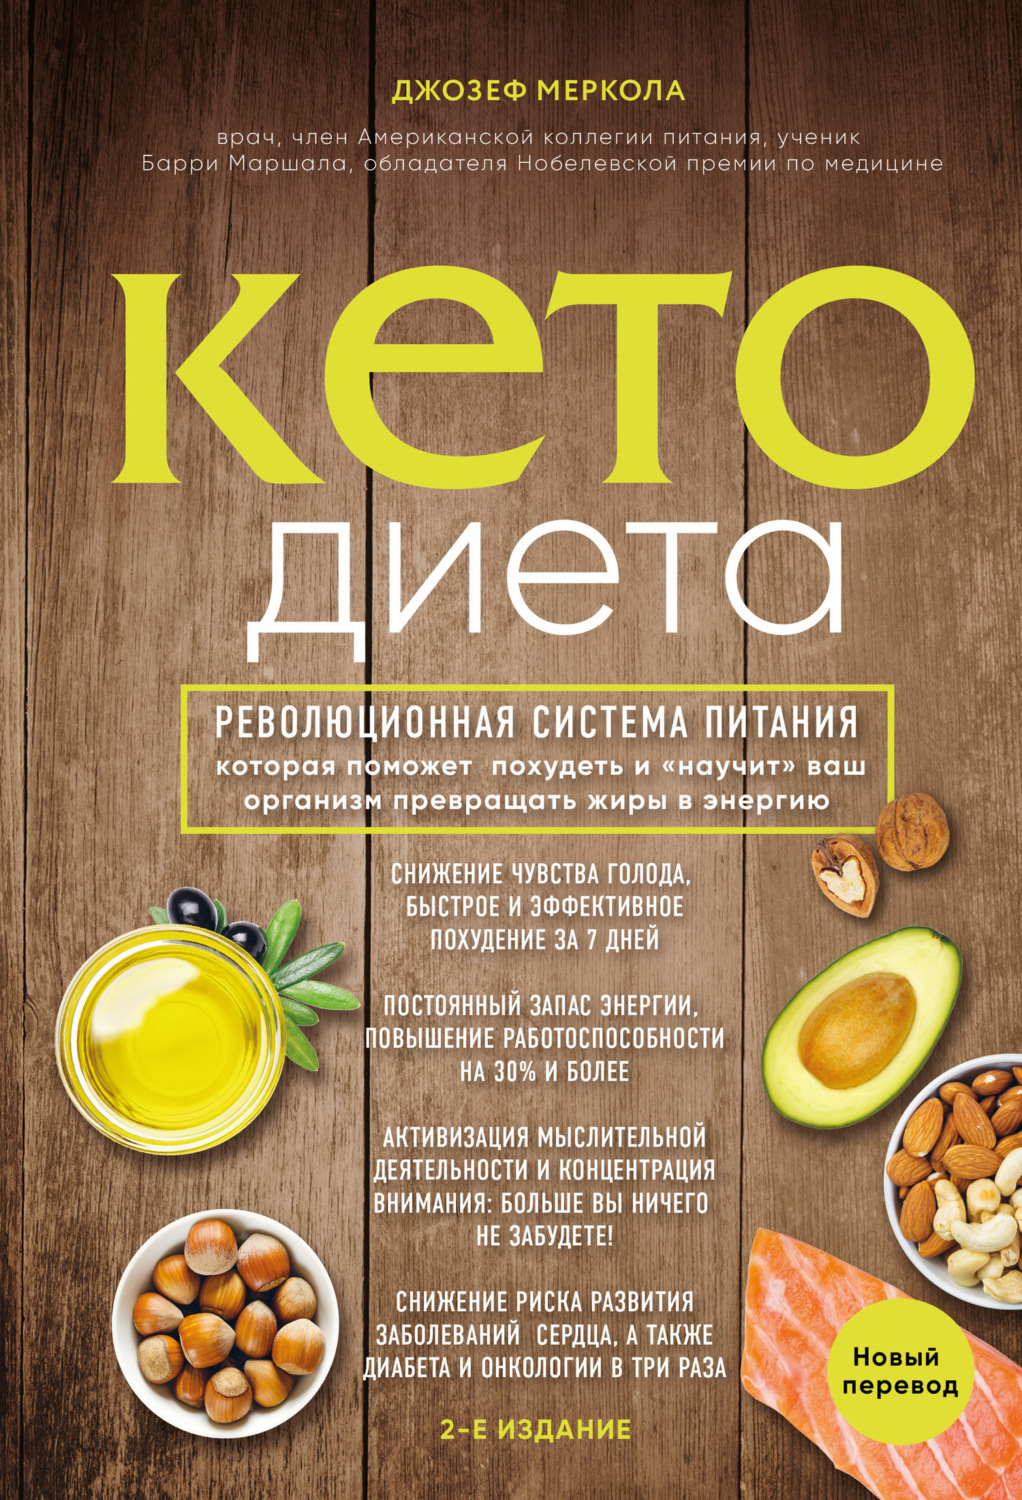 Dieta ketogenică